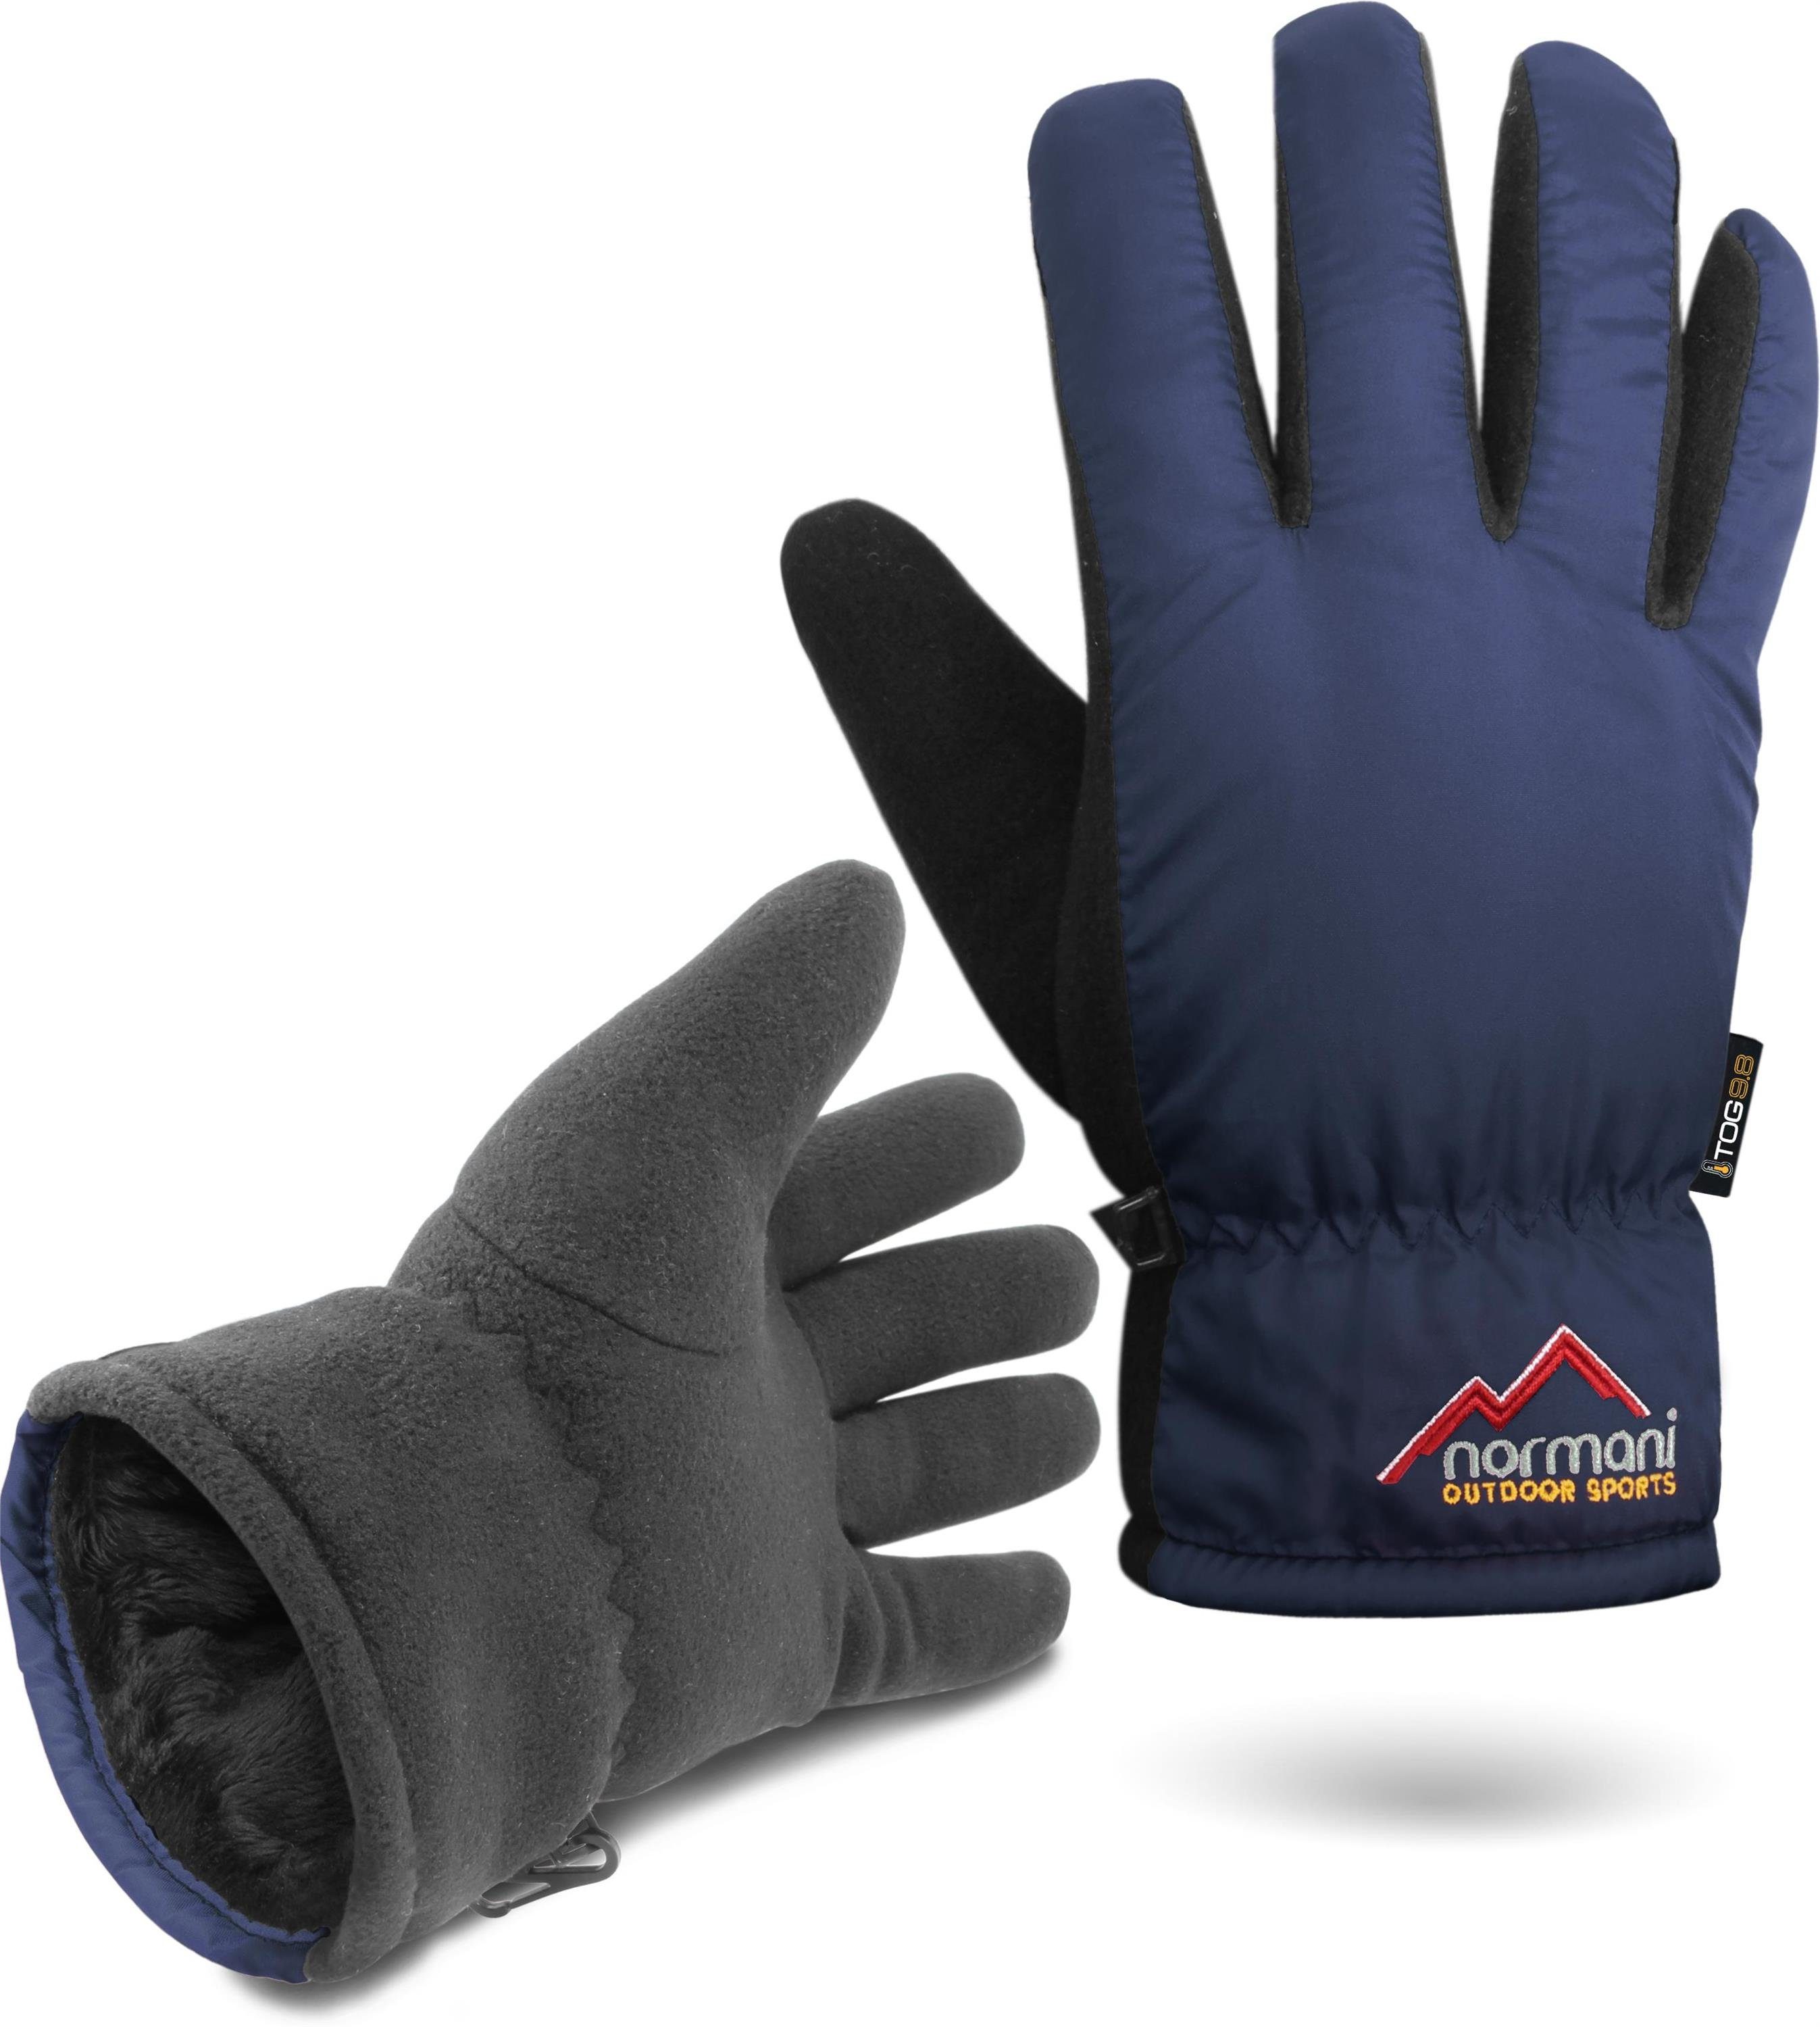 normani Skihandschuhe Herren Handschuhe TOG-Wert 9.8 Thermohandschuhe Innenfutter mit bis -10°C Skihandschuhe - Winterhandschuhe Navy Fleece Lupus